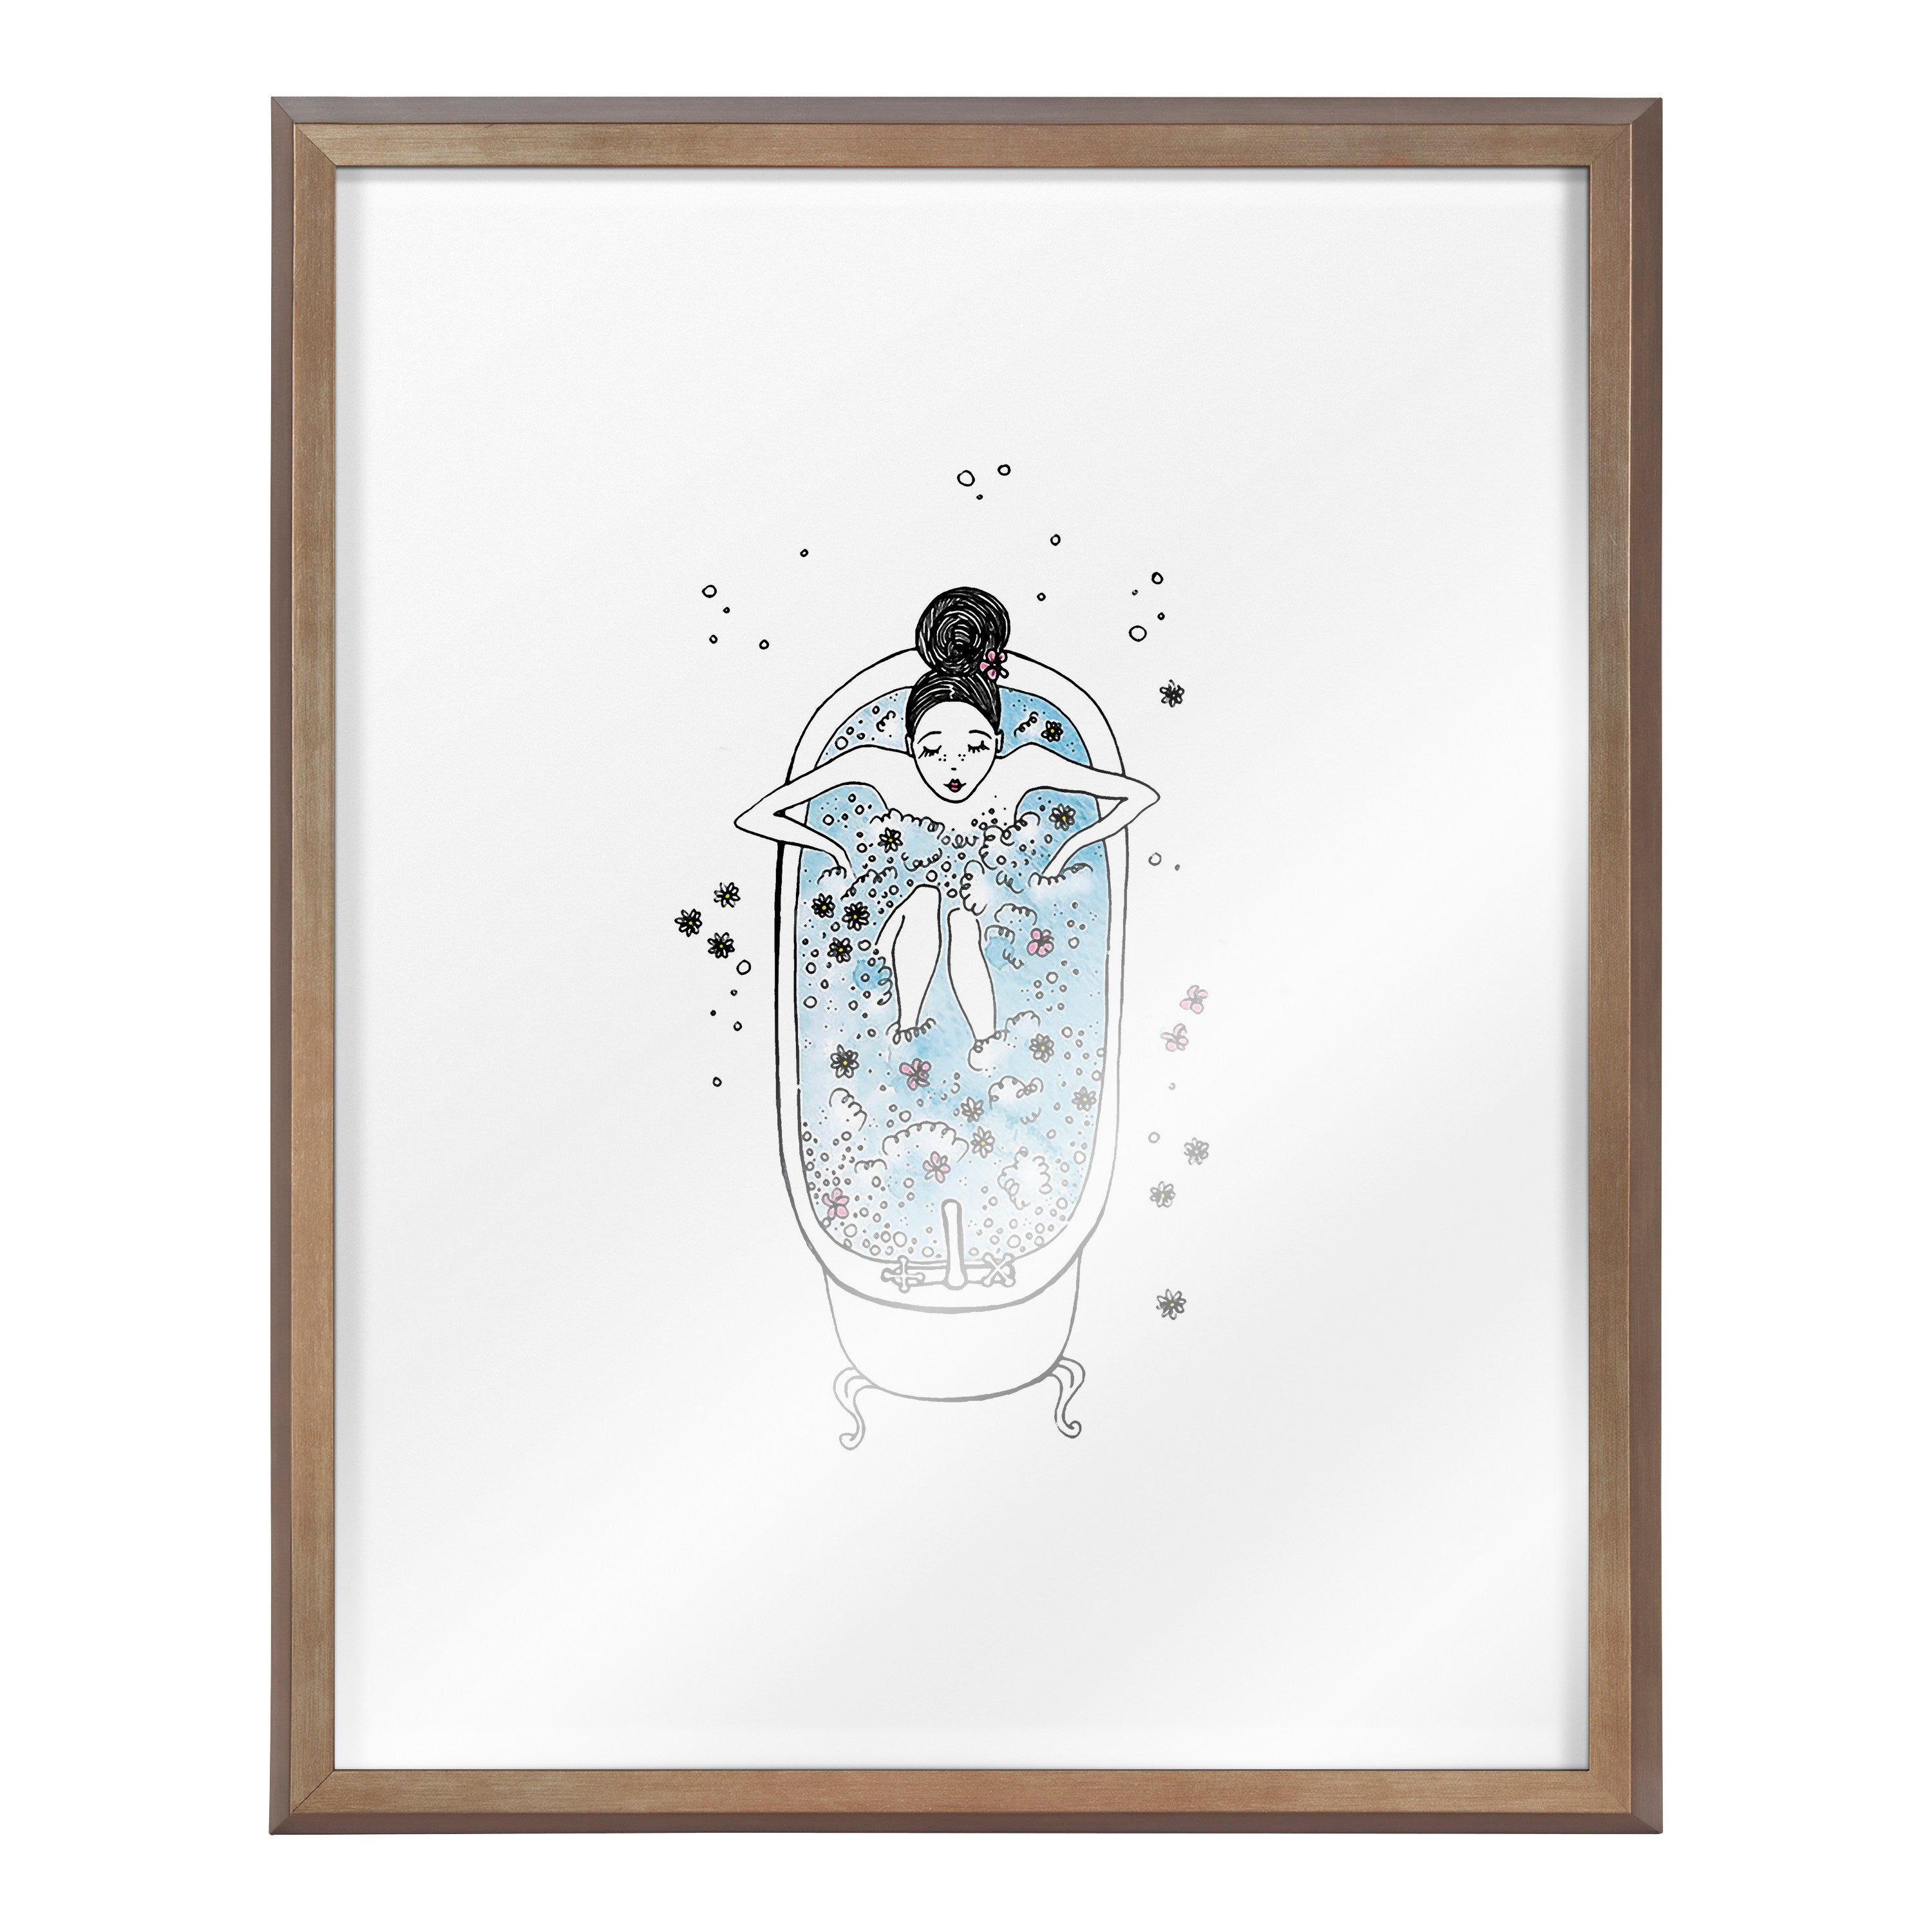 Blake Girl in a Bath Framed Printed Glass by Viola Kreczmer